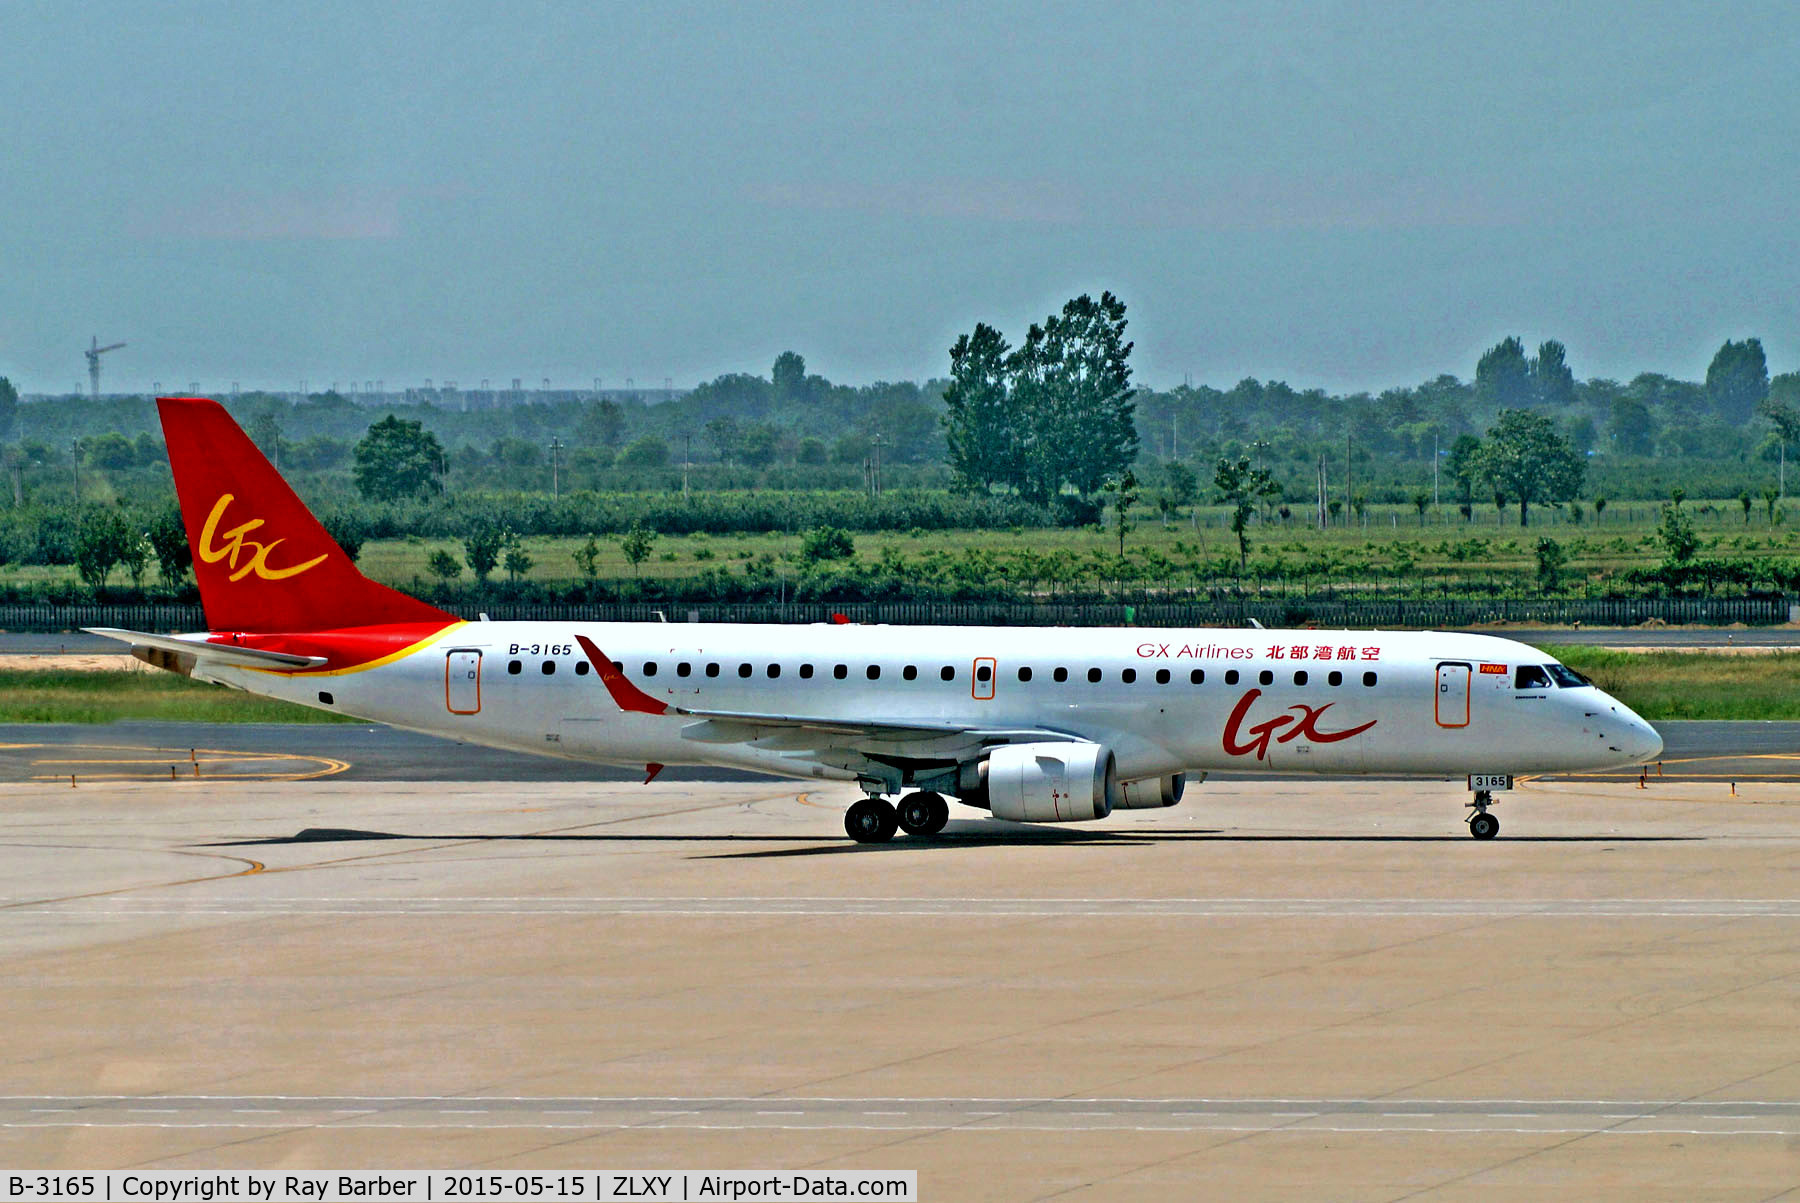 B-3165, 2010 Embraer 190LR (ERJ-190-100LR) C/N 19000340, B-3165   Embraer Emb-190-100LR [19000340] (GX Airlines)  Xi An-Xianyang~B 15/05/2015